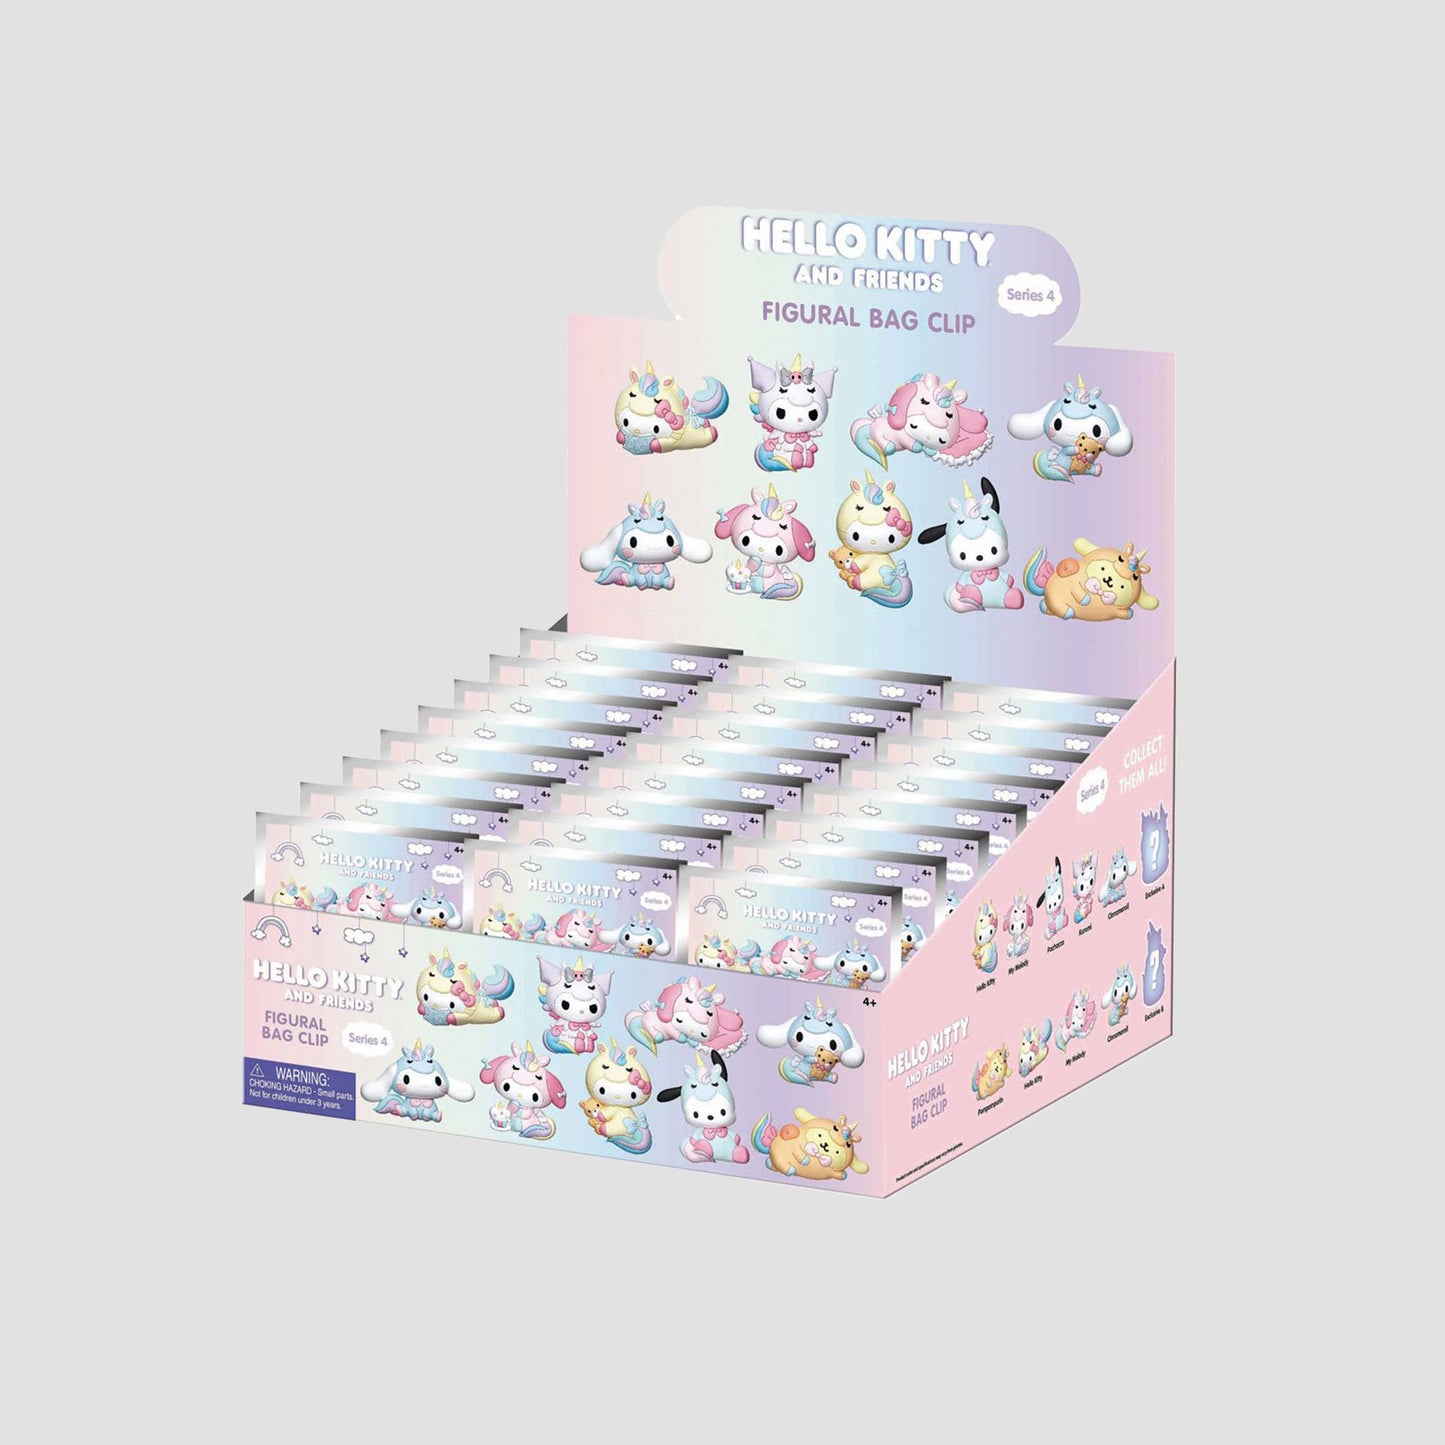  Hello Kitty Sanrio Surprise Minis Figures (1.5-in